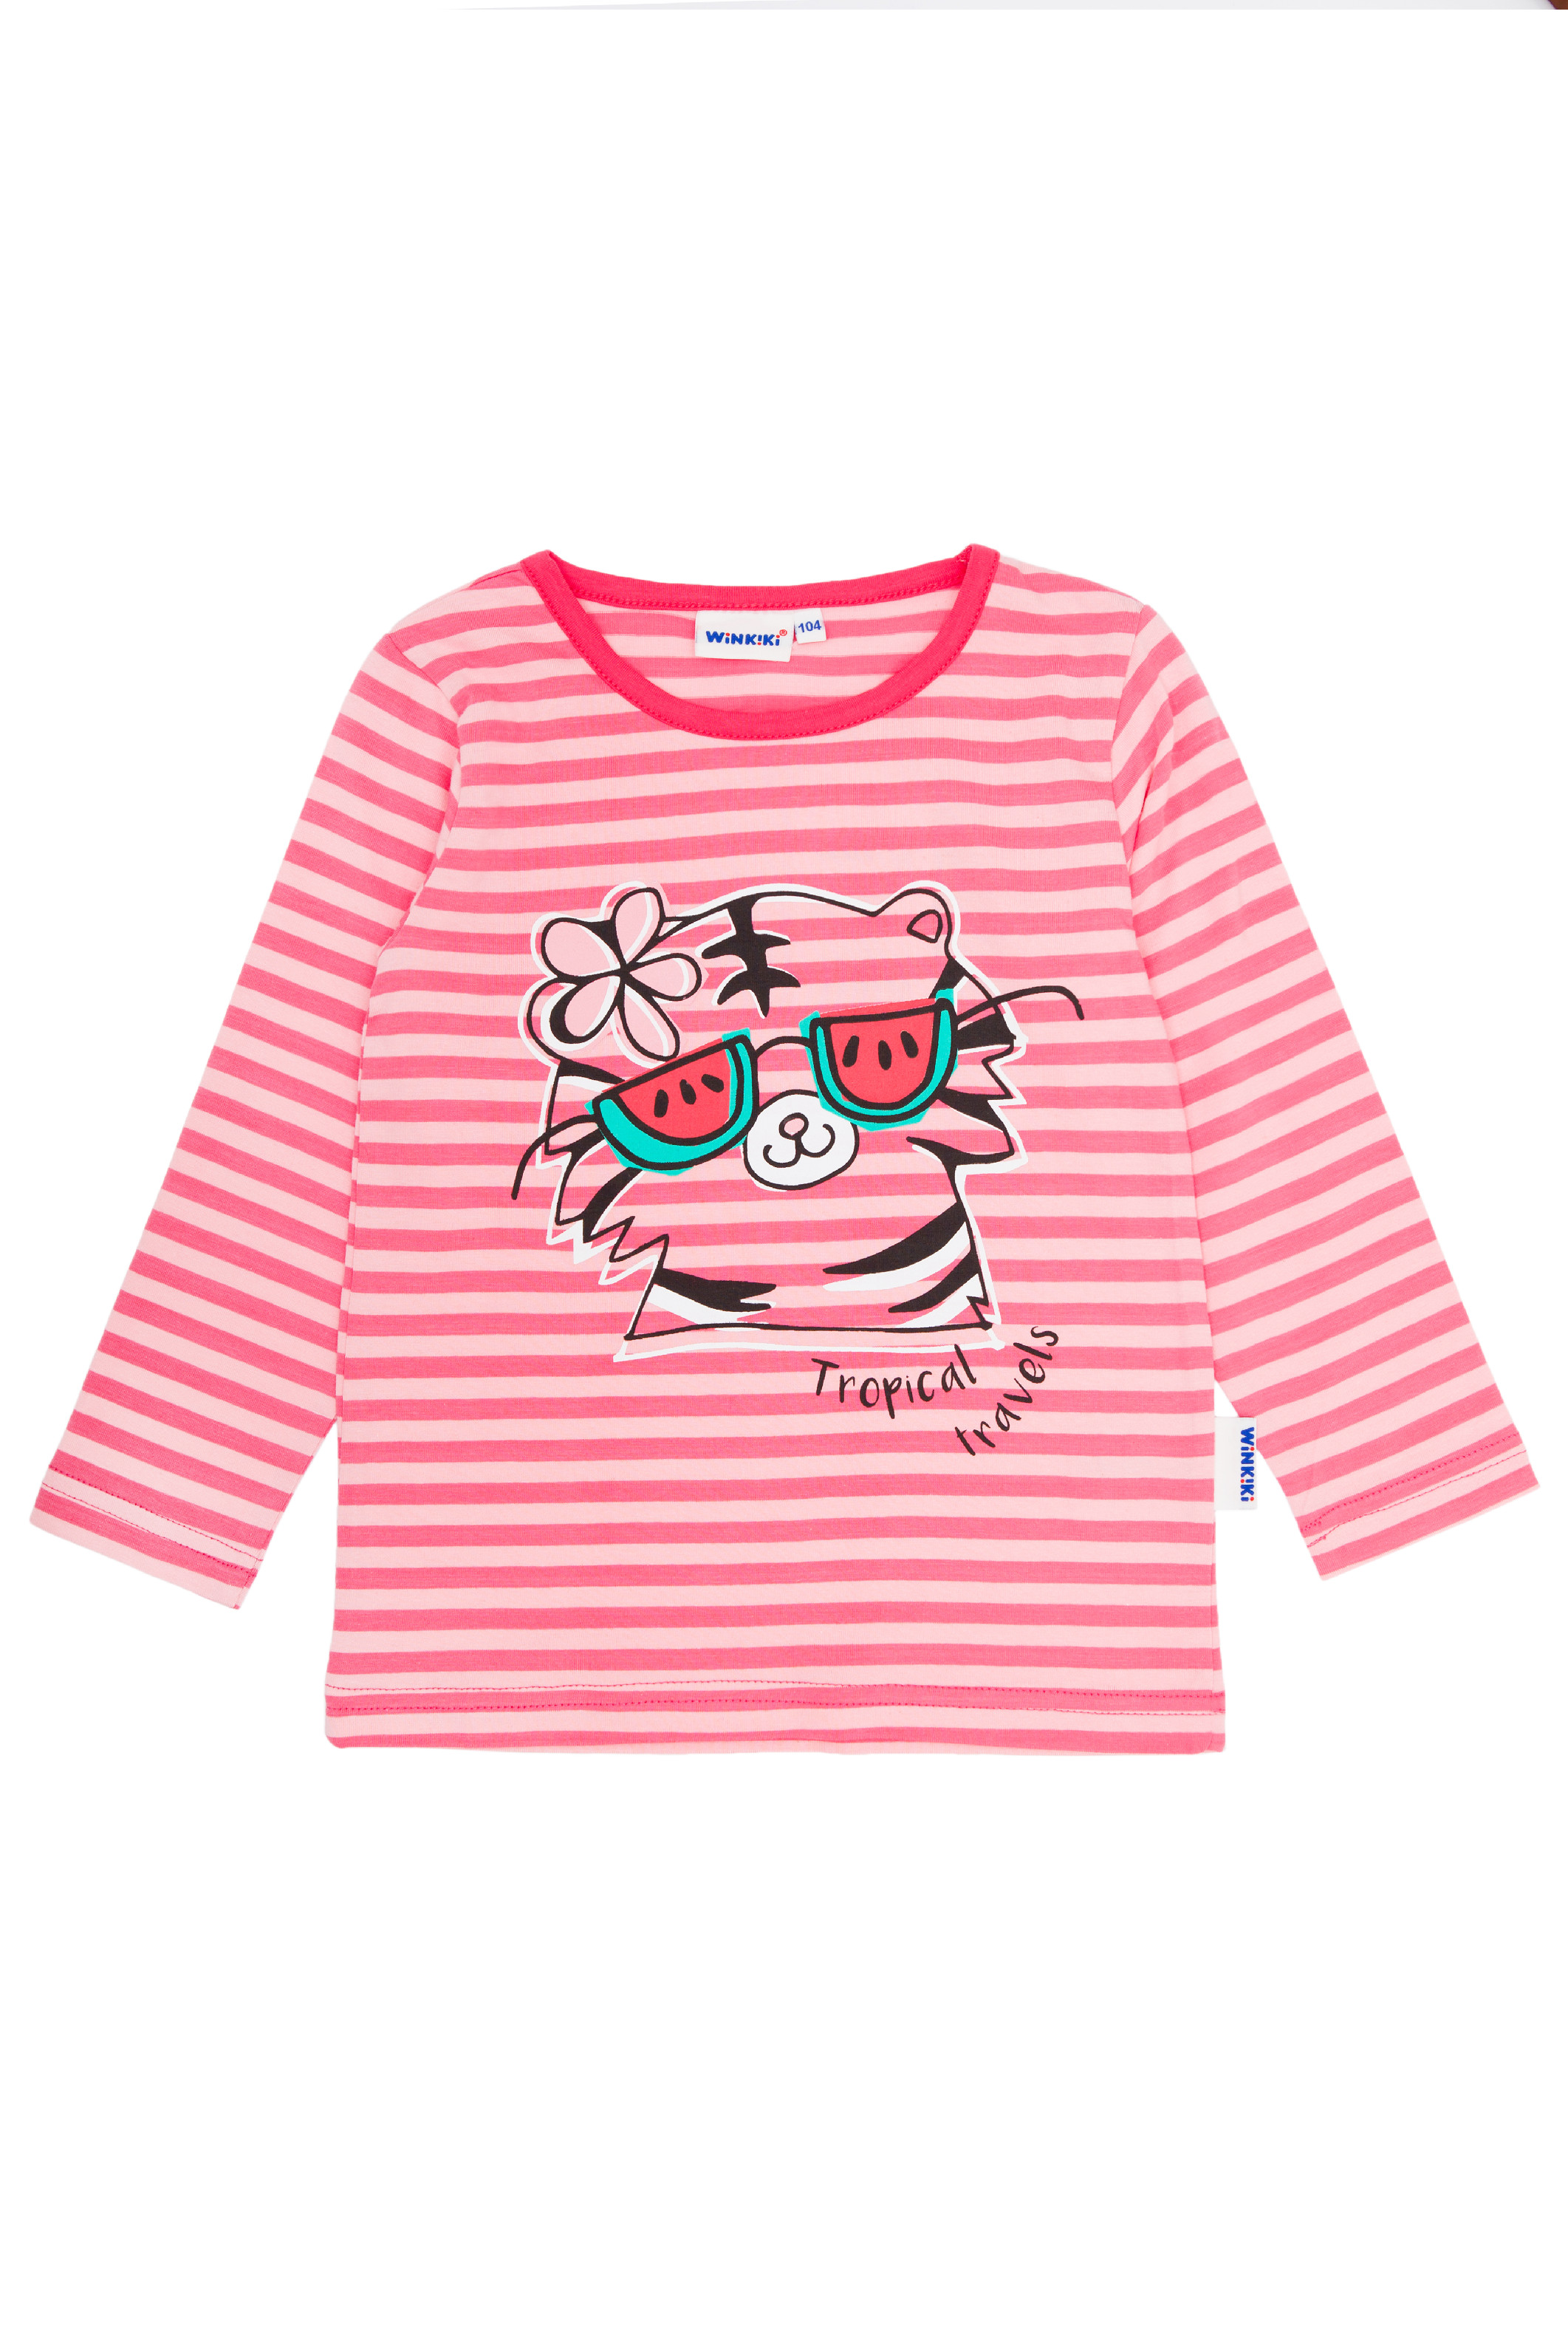 Dívčí triko - Winkiki WKG 01714, růžová Barva: Růžová, Velikost: 104